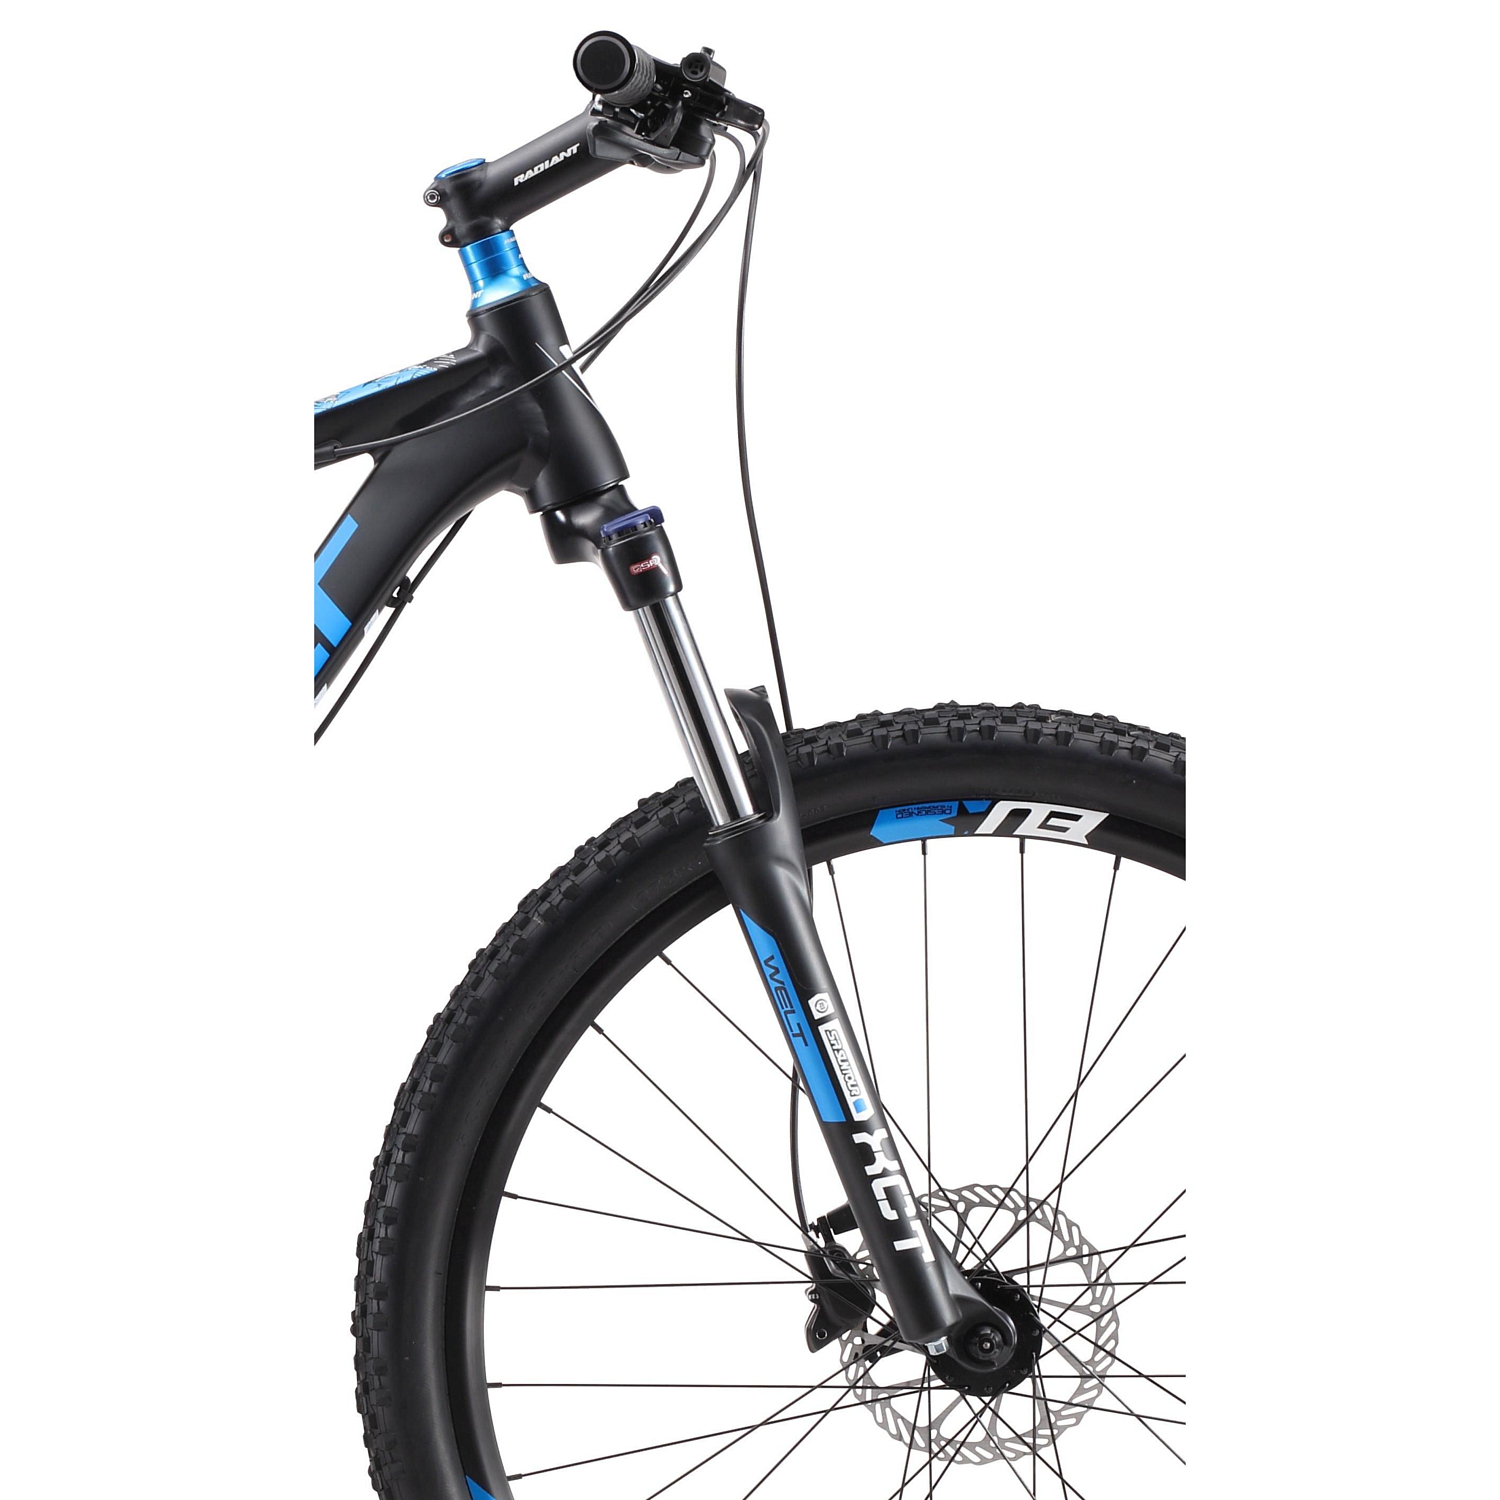 Велосипед Welt Rockfall 3.0 29 2019 matt black/blue/white